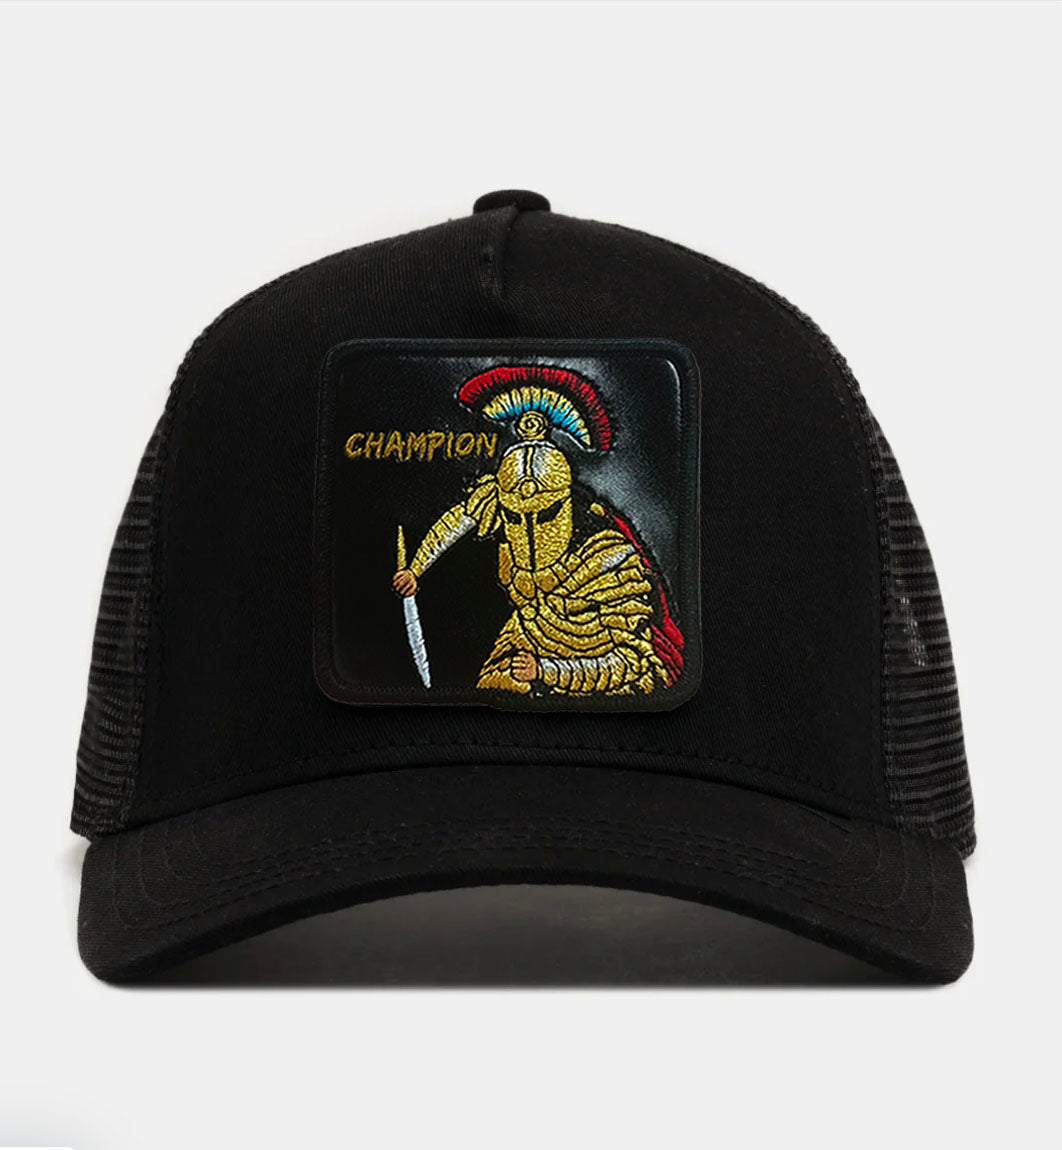 Gladiator "Champion" Trucker Hat